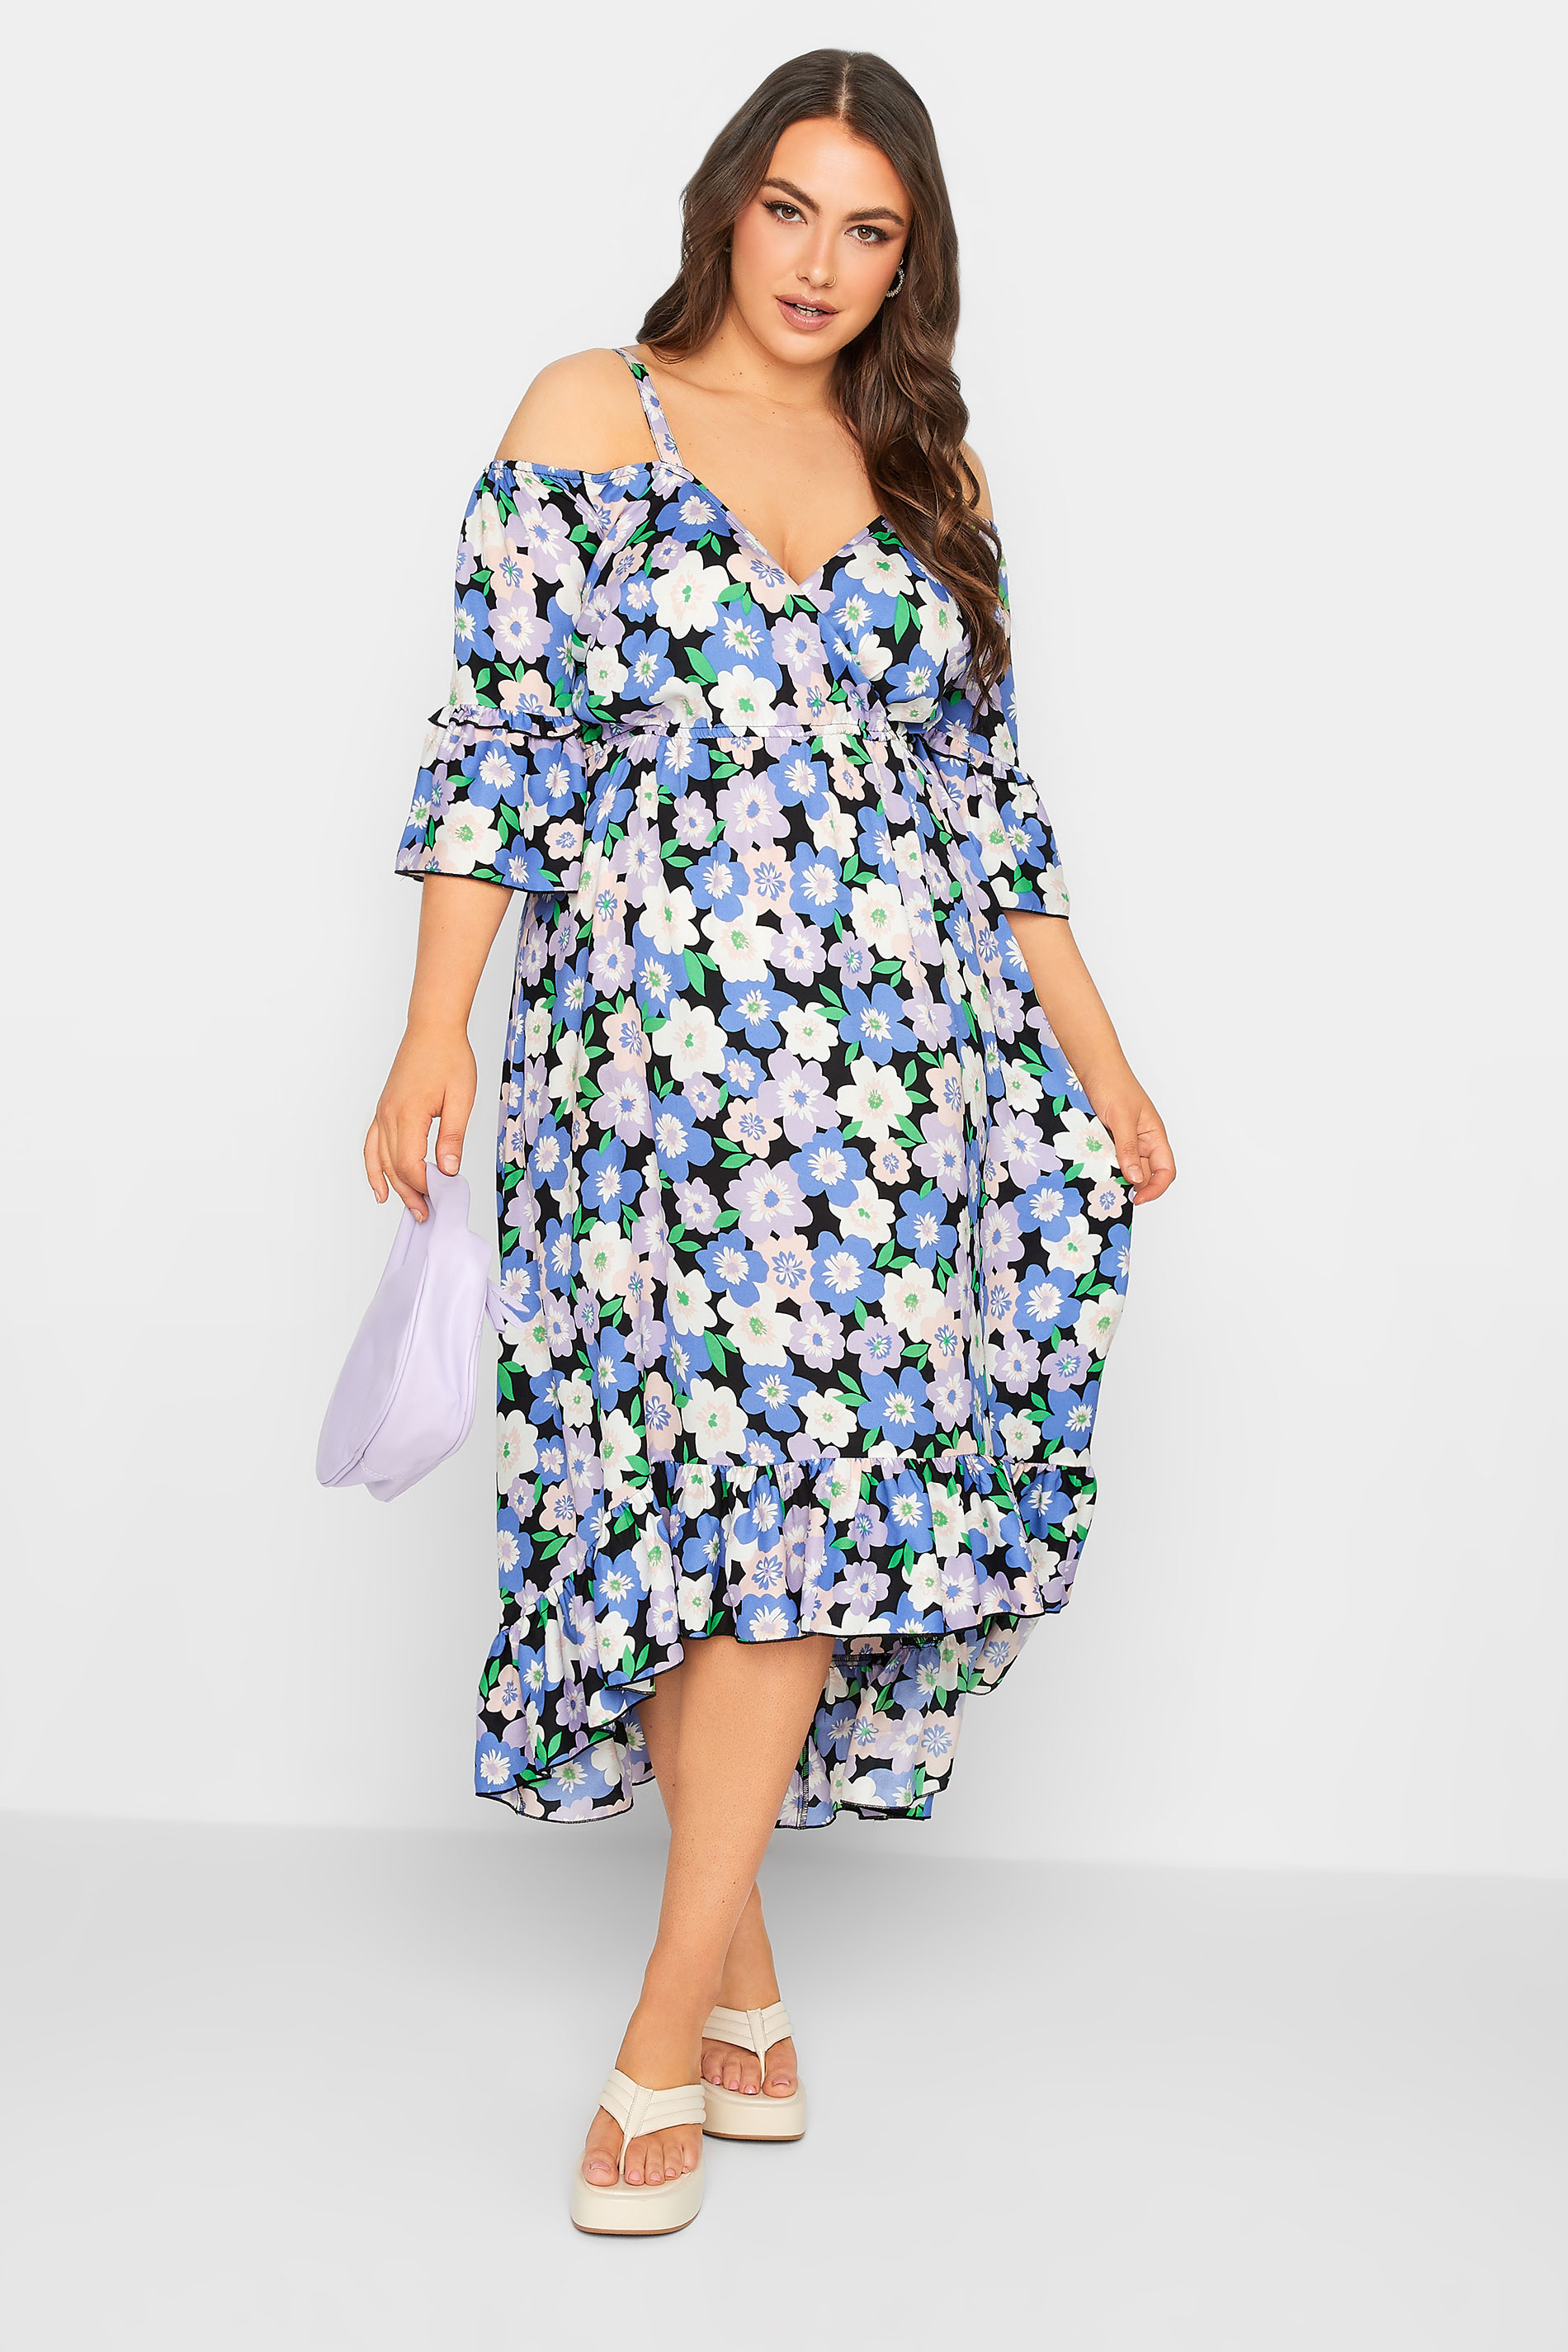 YOURS Plus Size Purple Floral Cold Shoulder Midaxi Dress | Yours Clothing 1